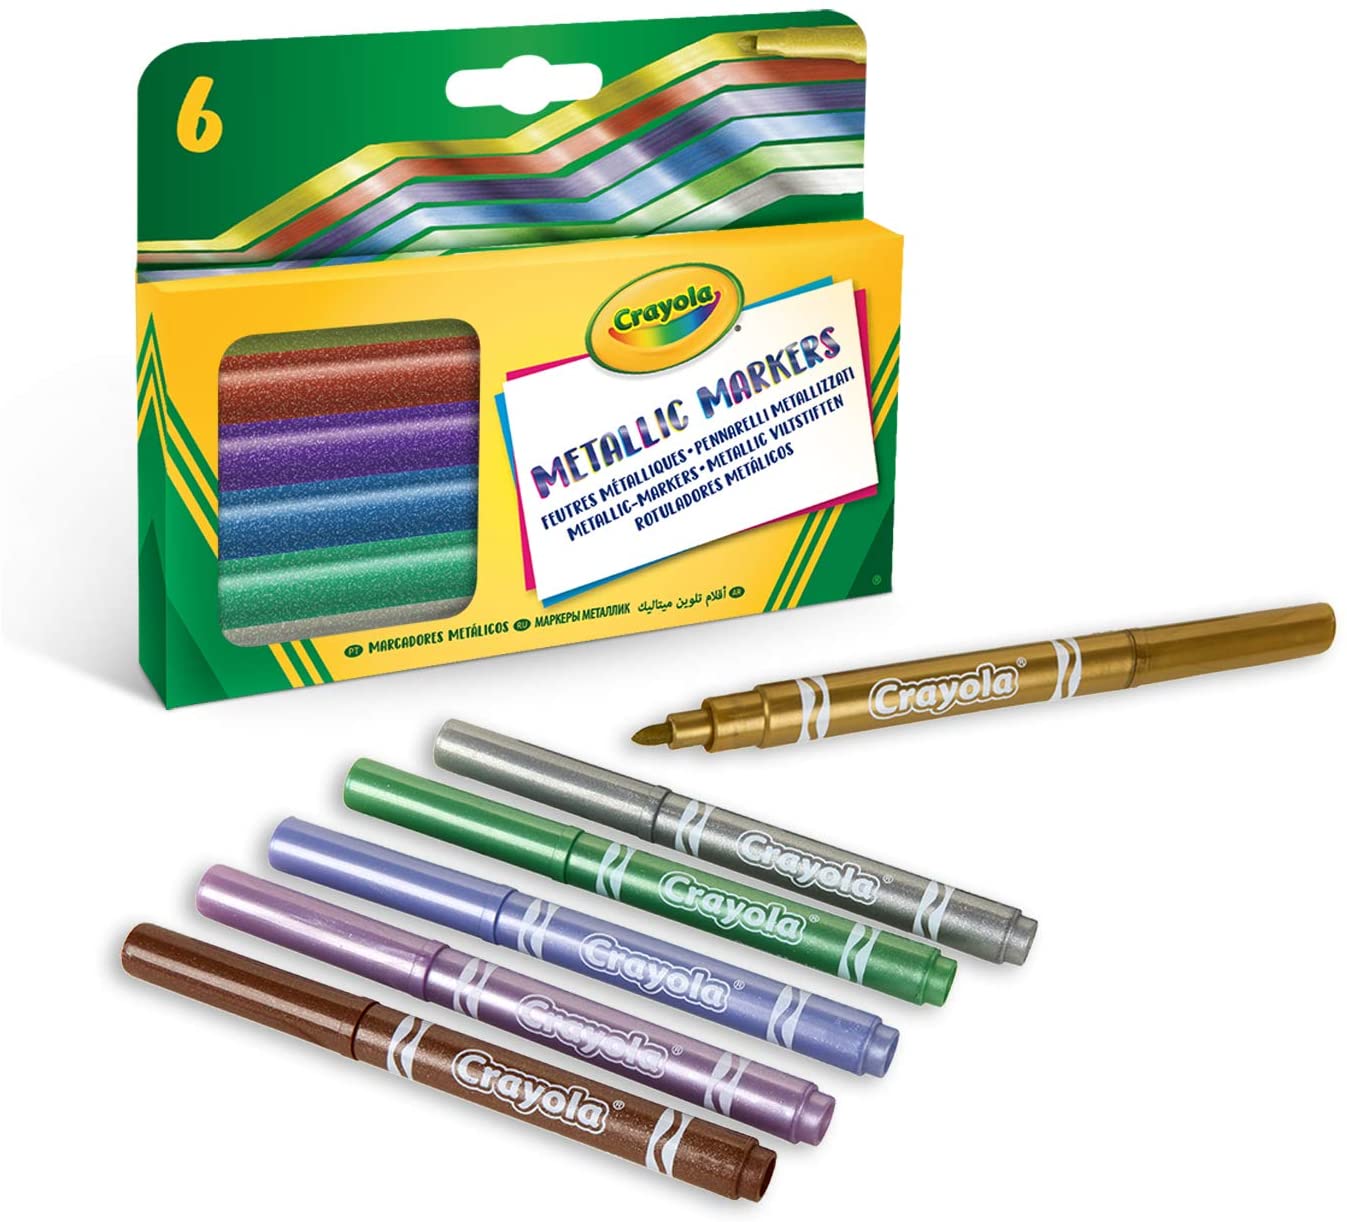 Crayola 6 Metallic Markers